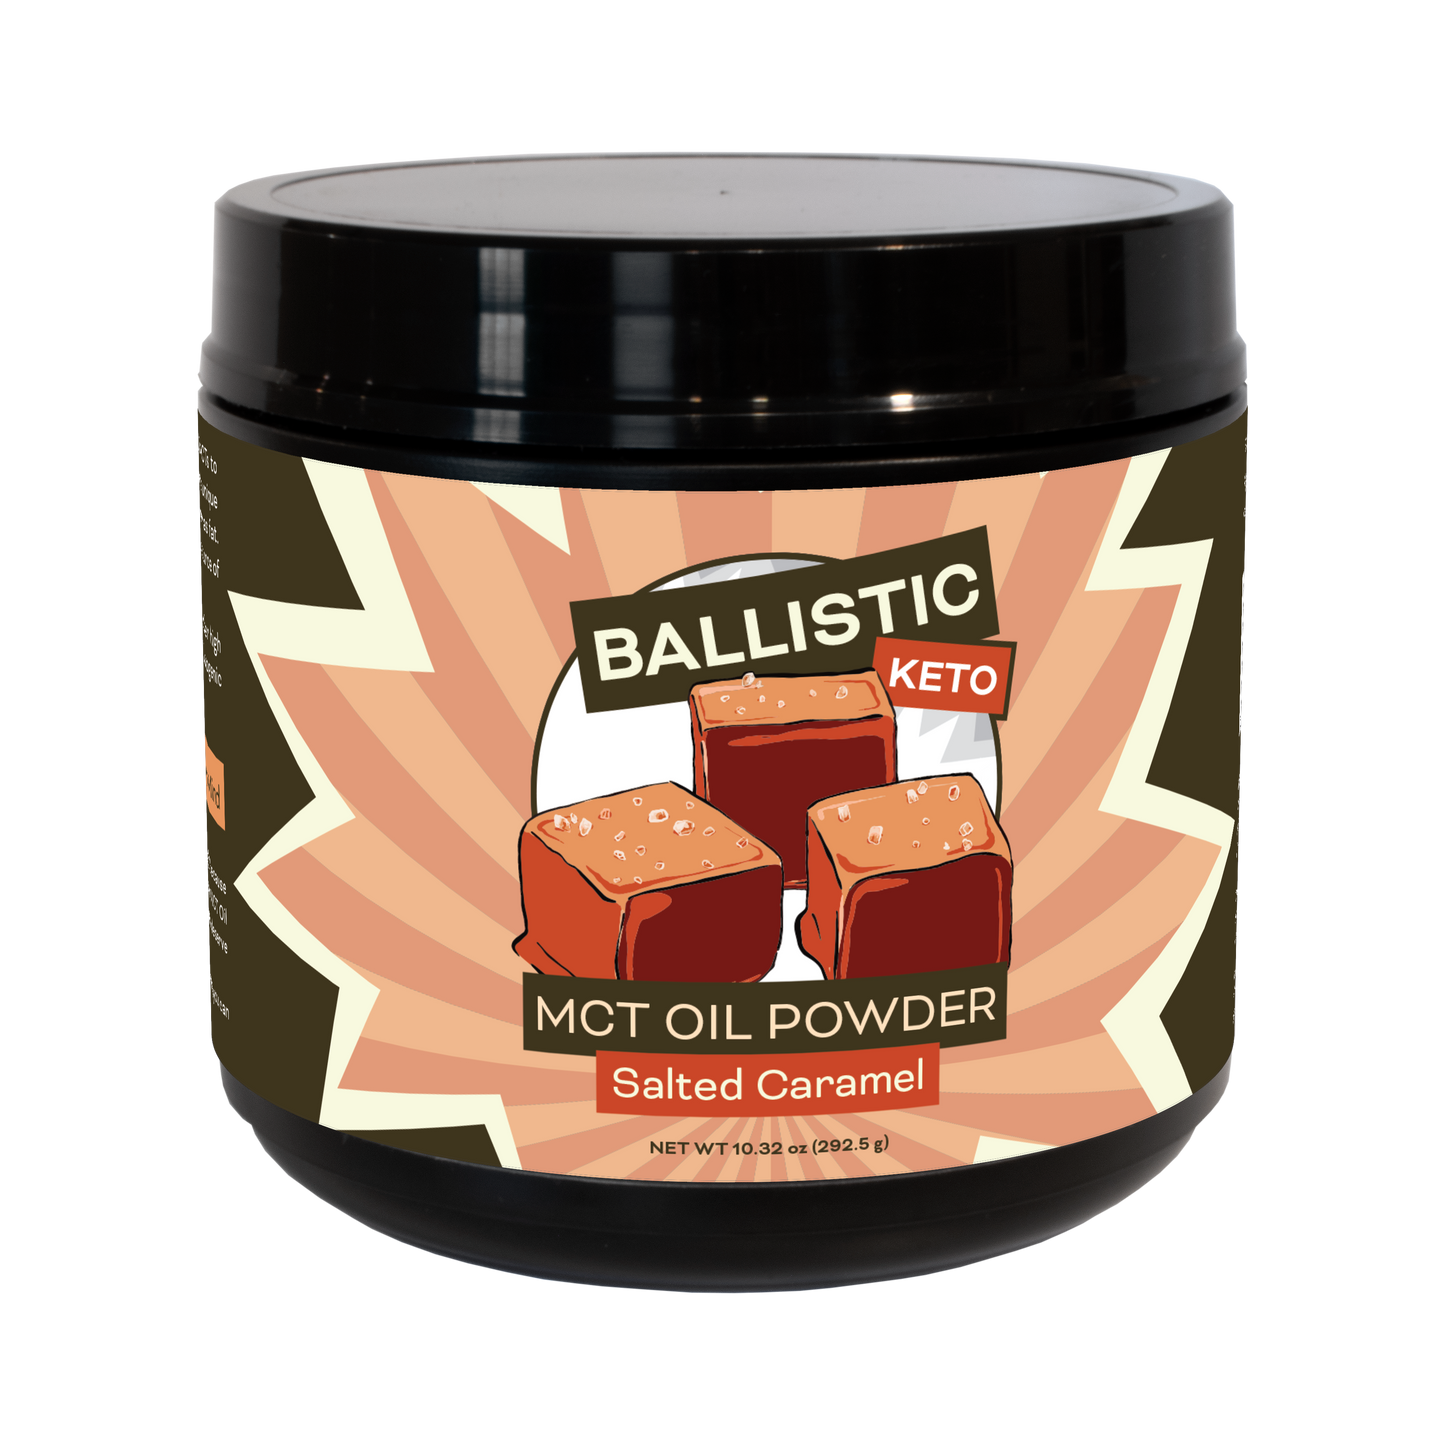 Ballistic Keto Salted Caramel MCT Oil Powder